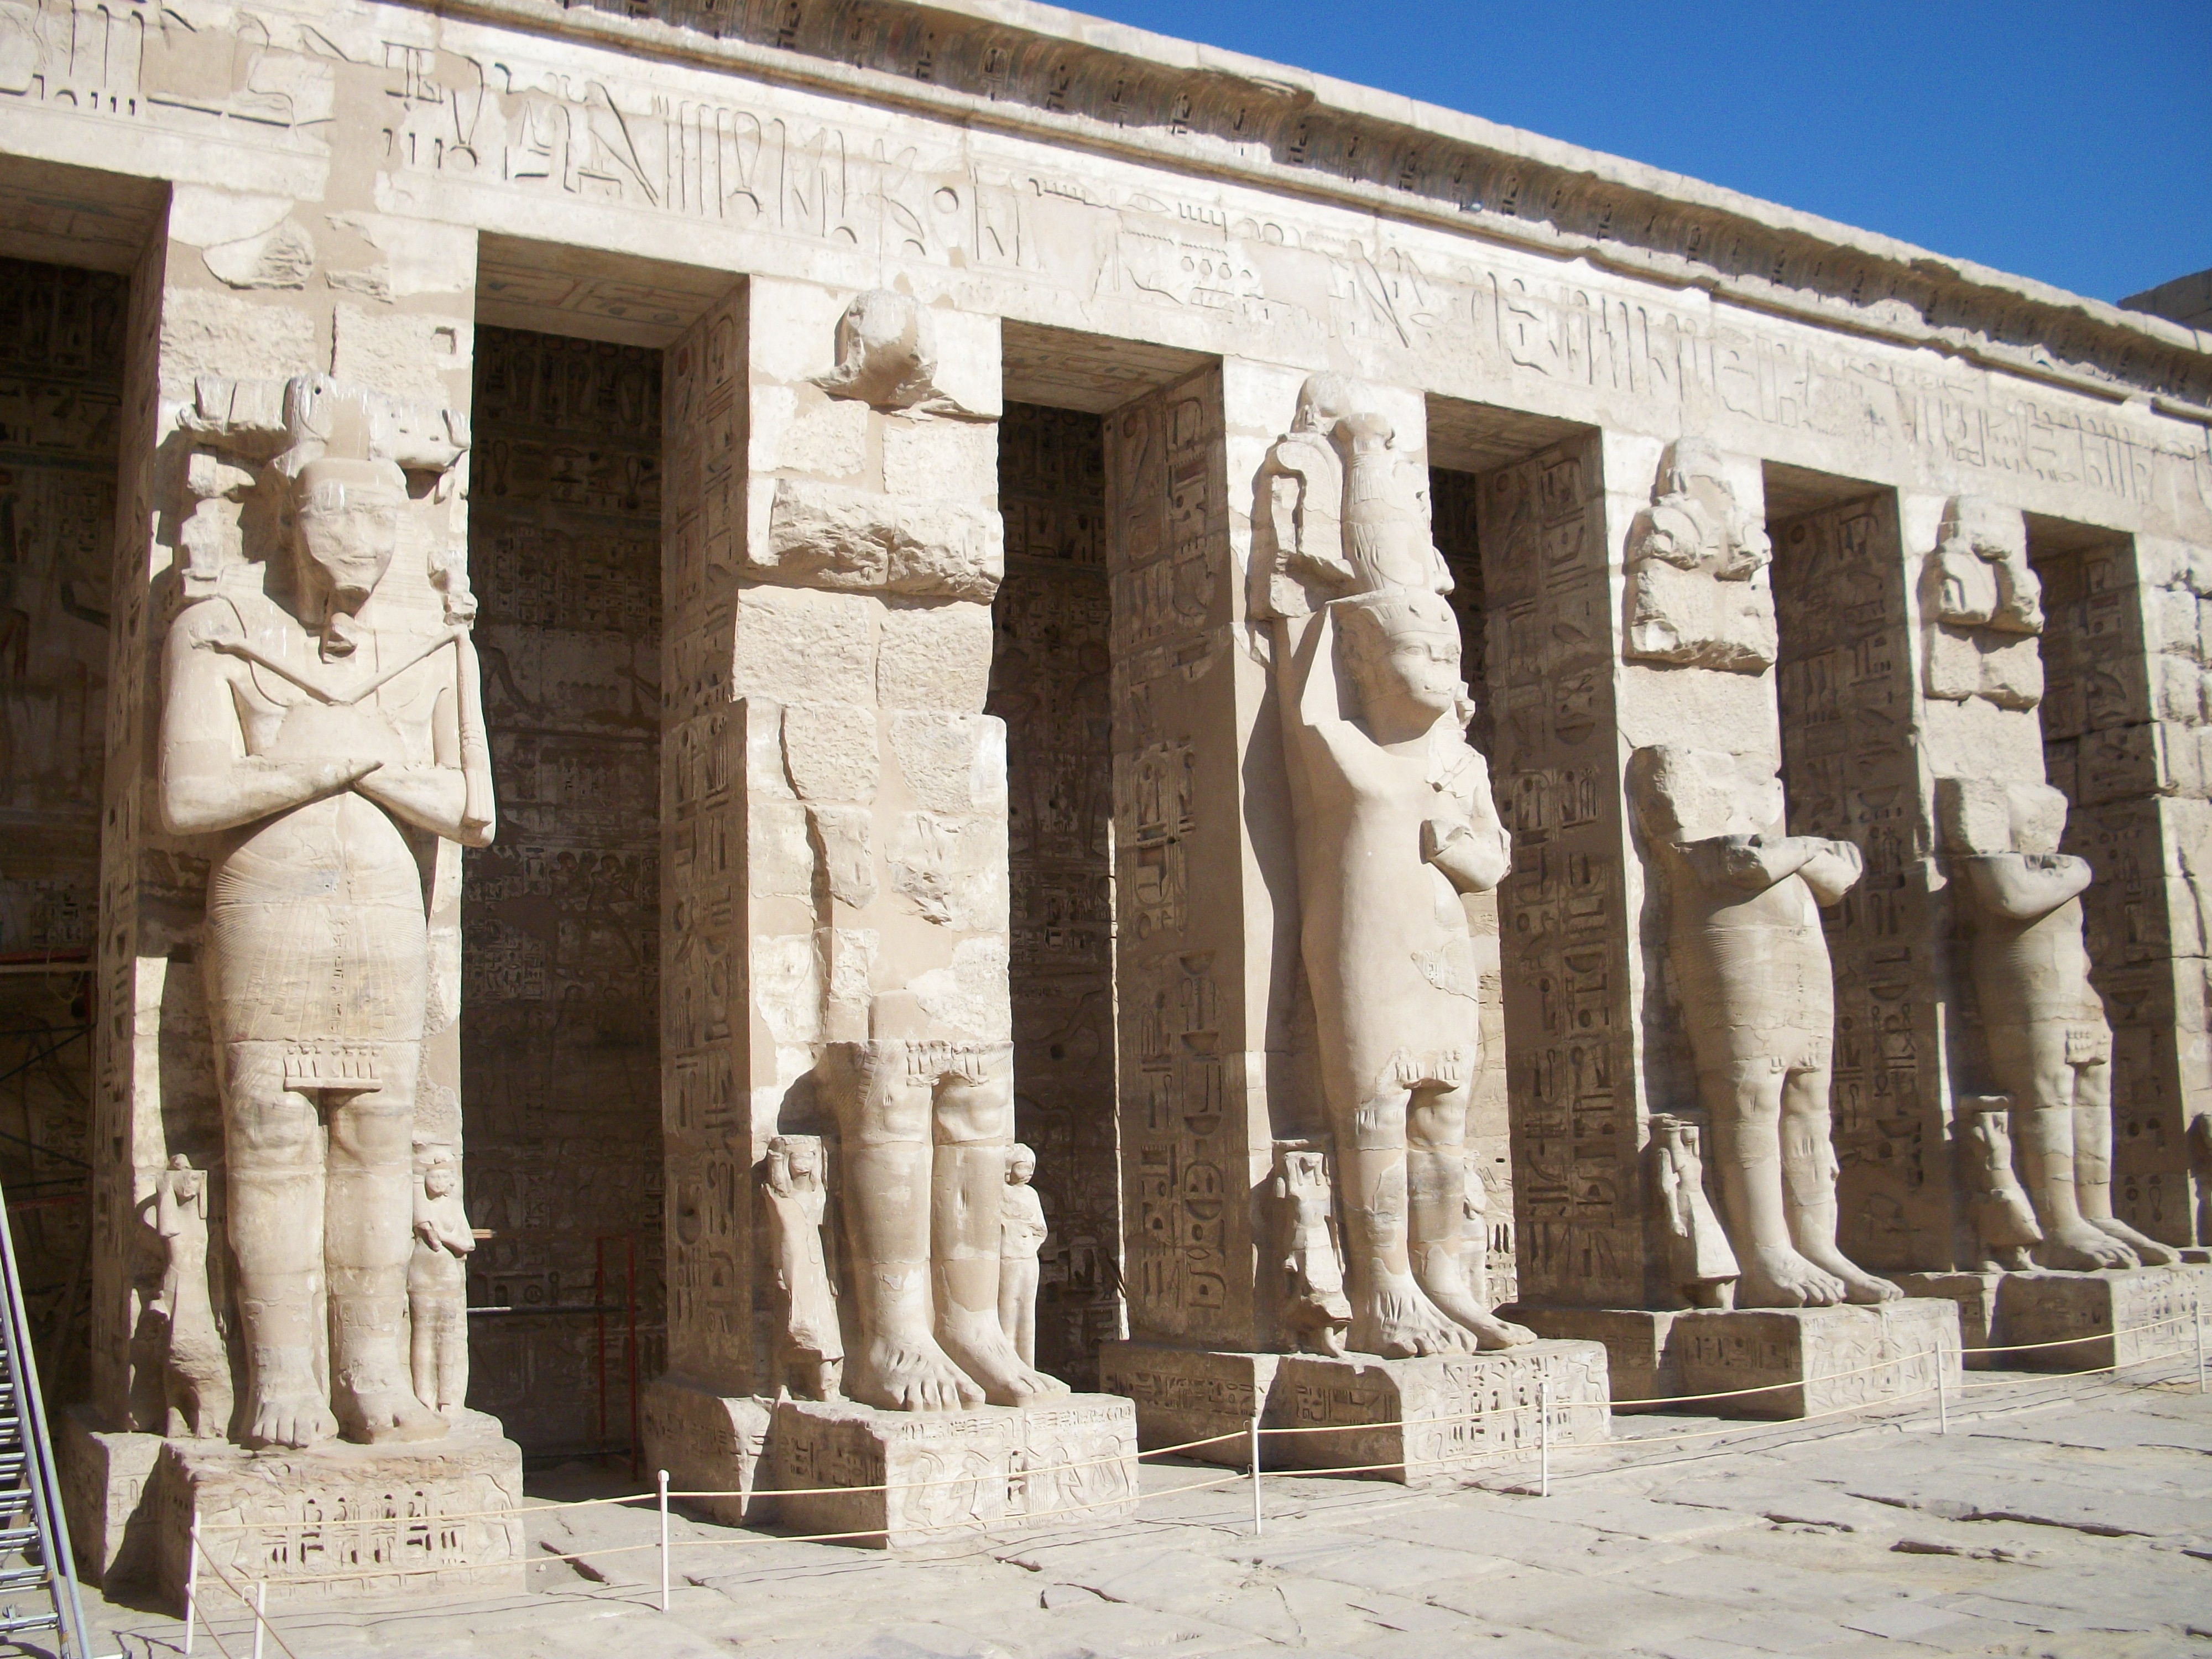 General 4000x3000 history statue Egypt landmark World Heritage Site